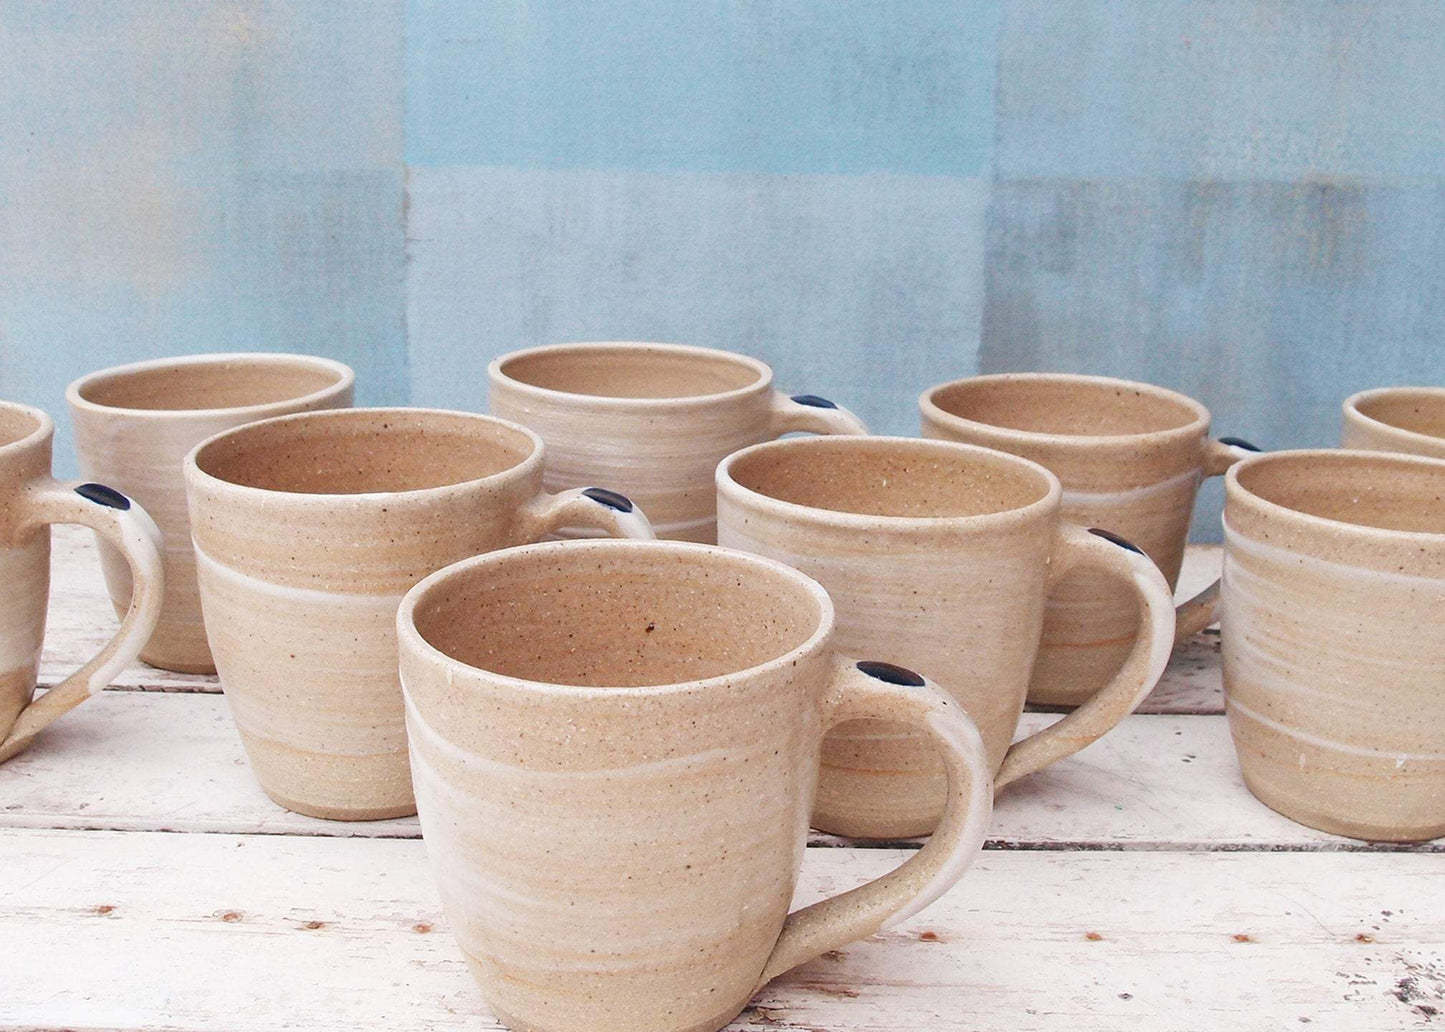 SabineSchmidtPottery Rustic Pottery Mug in White/Blue, Large Ceramic Coffee Cup Devon Ceramics